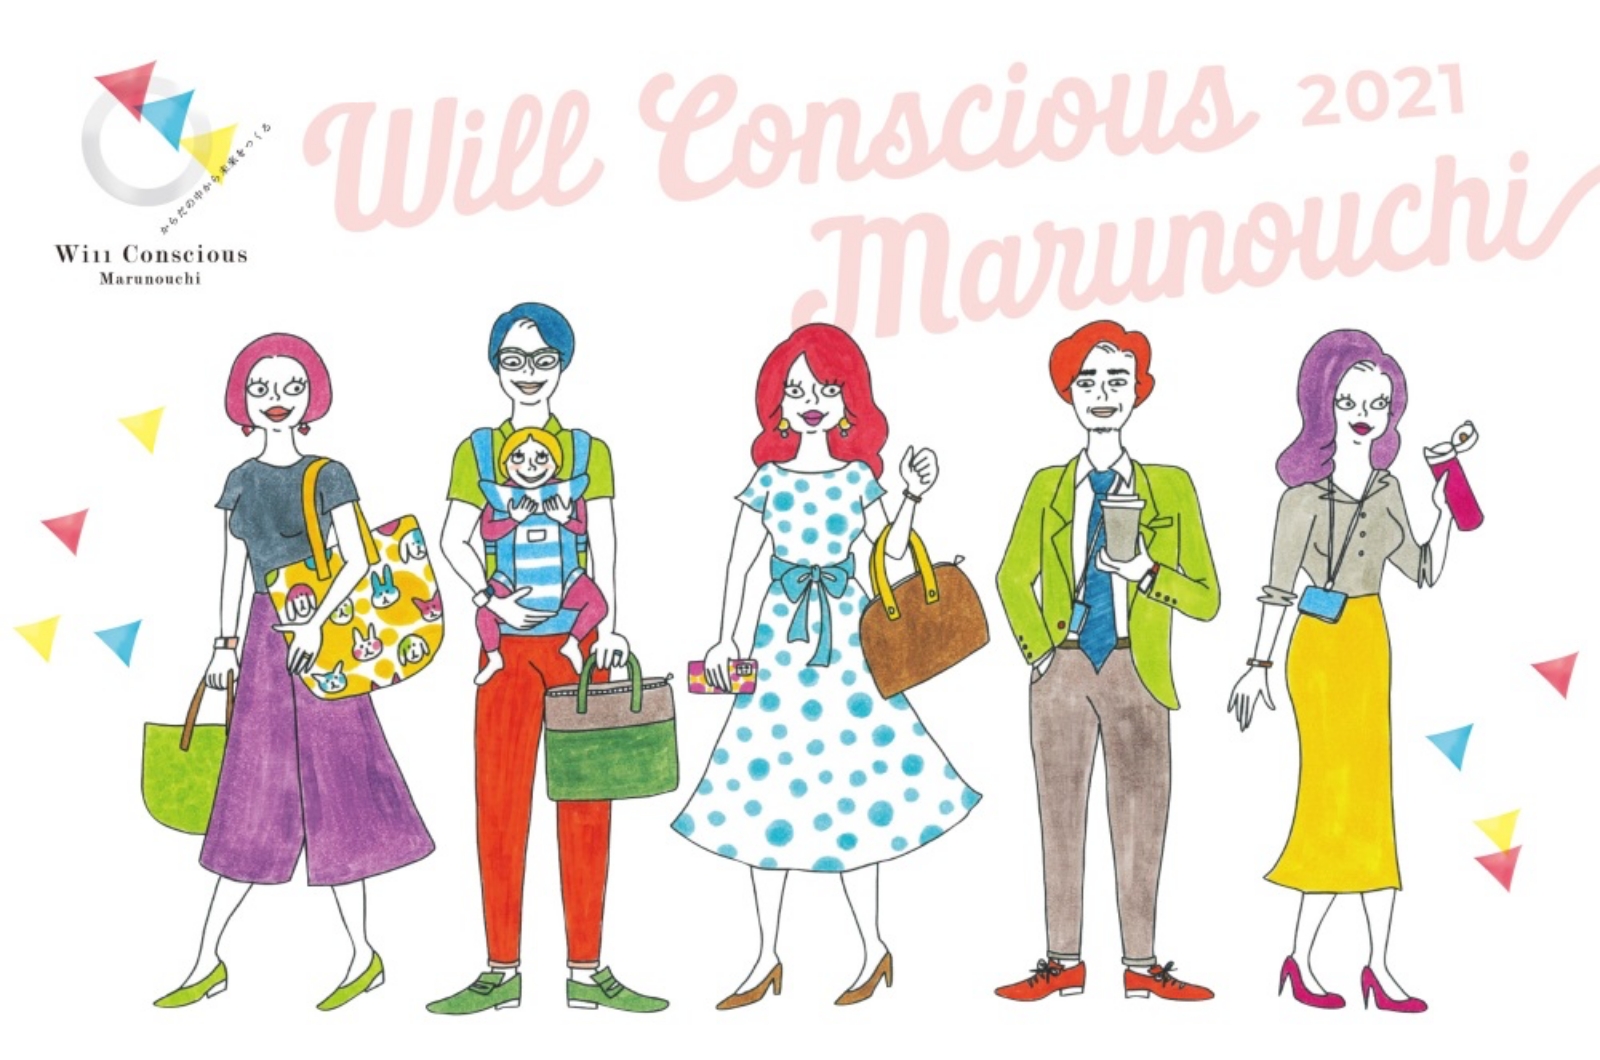 Will Conscious Marunouchi